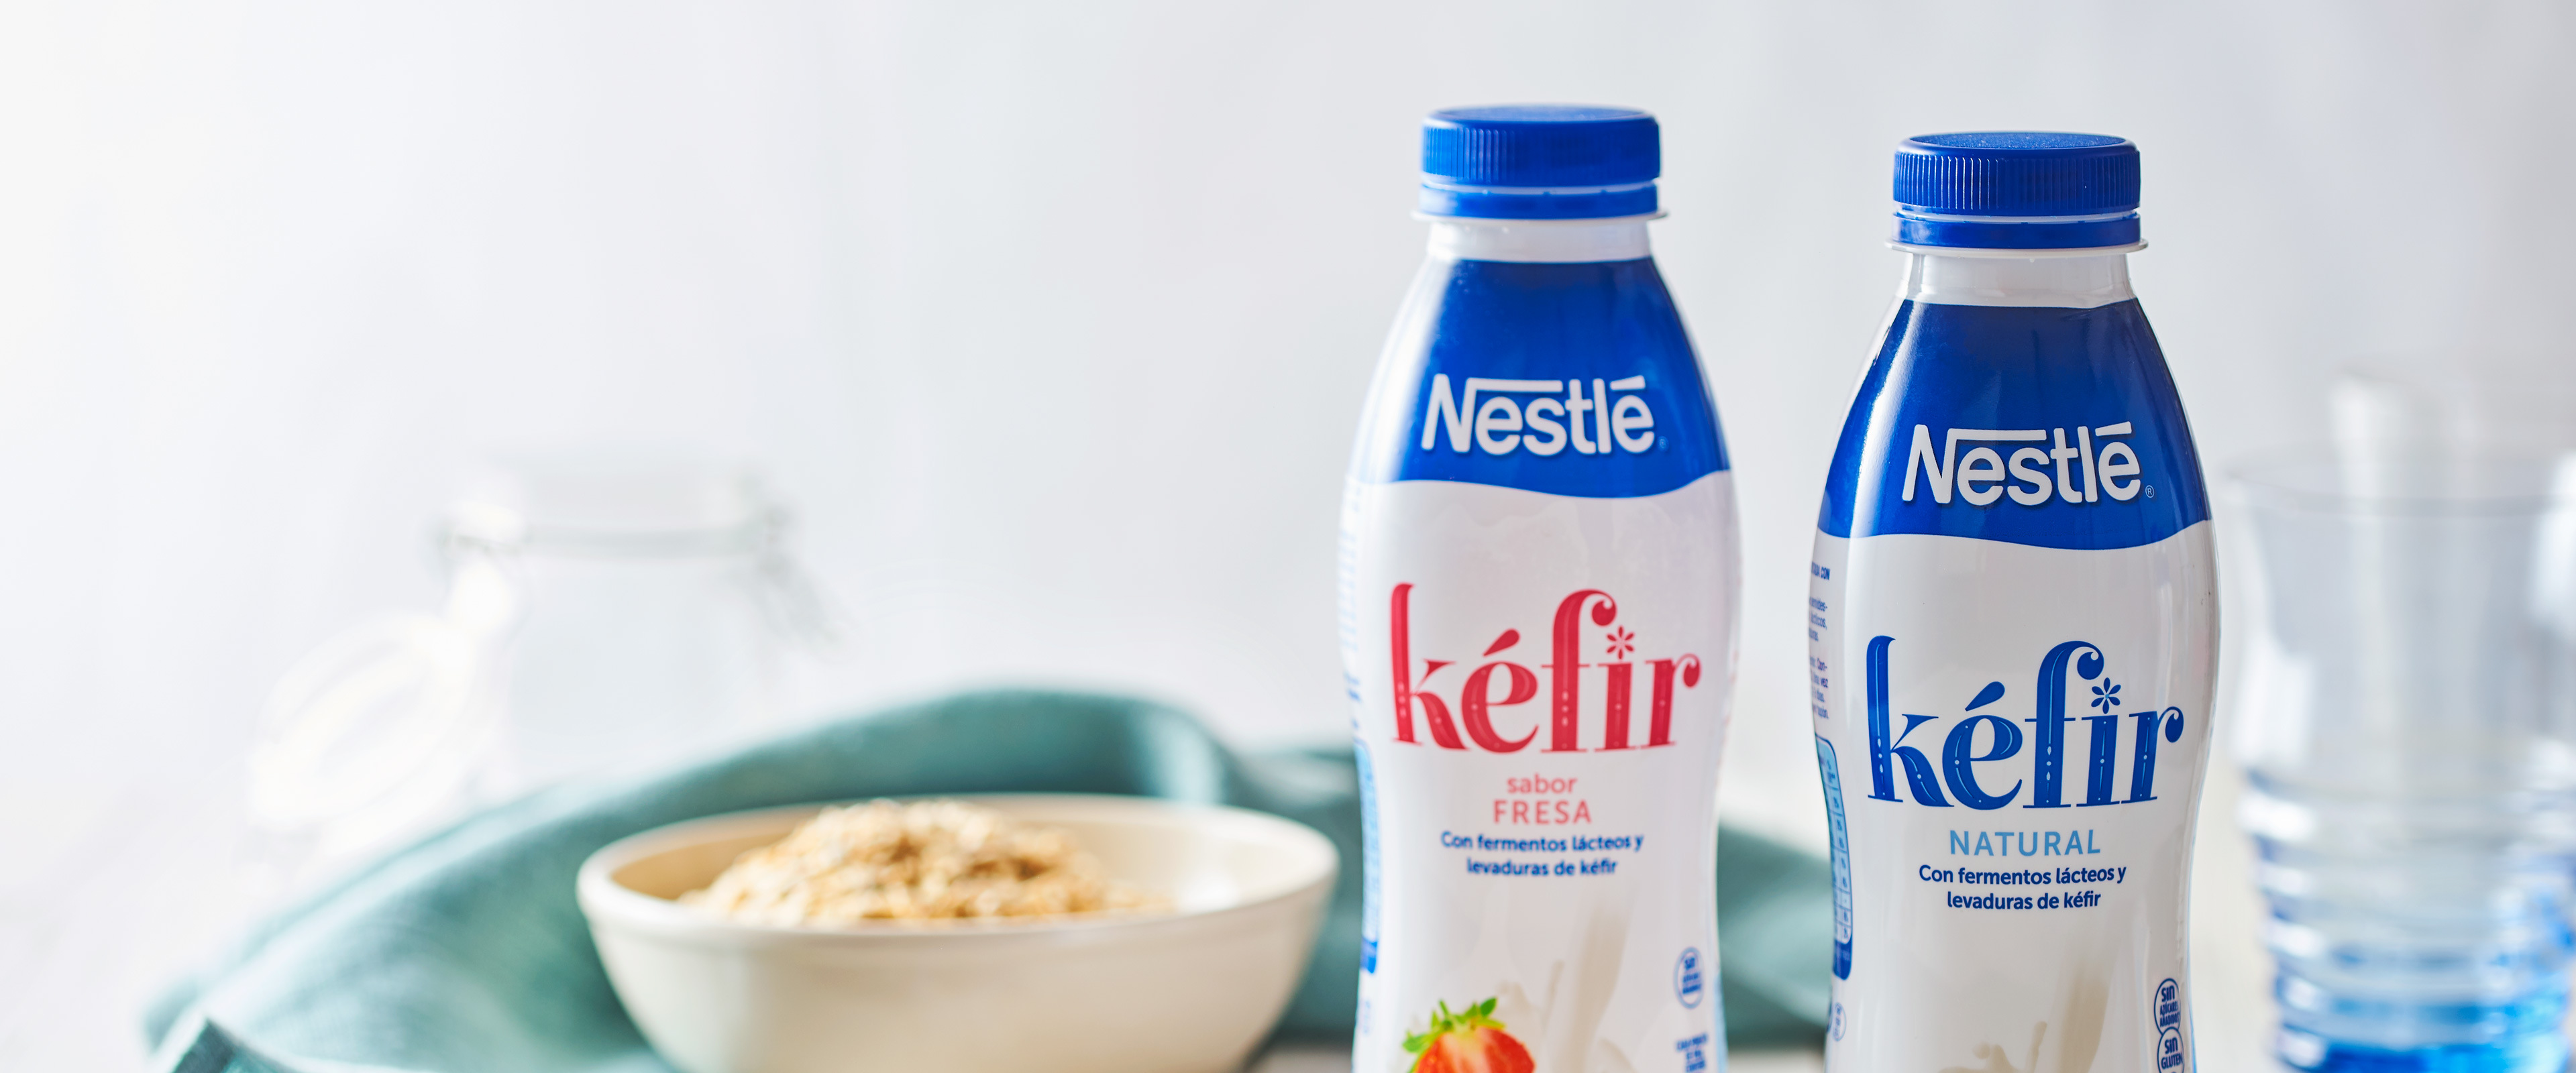 Kéfir Nestlé, un producto tradicional para una marca global